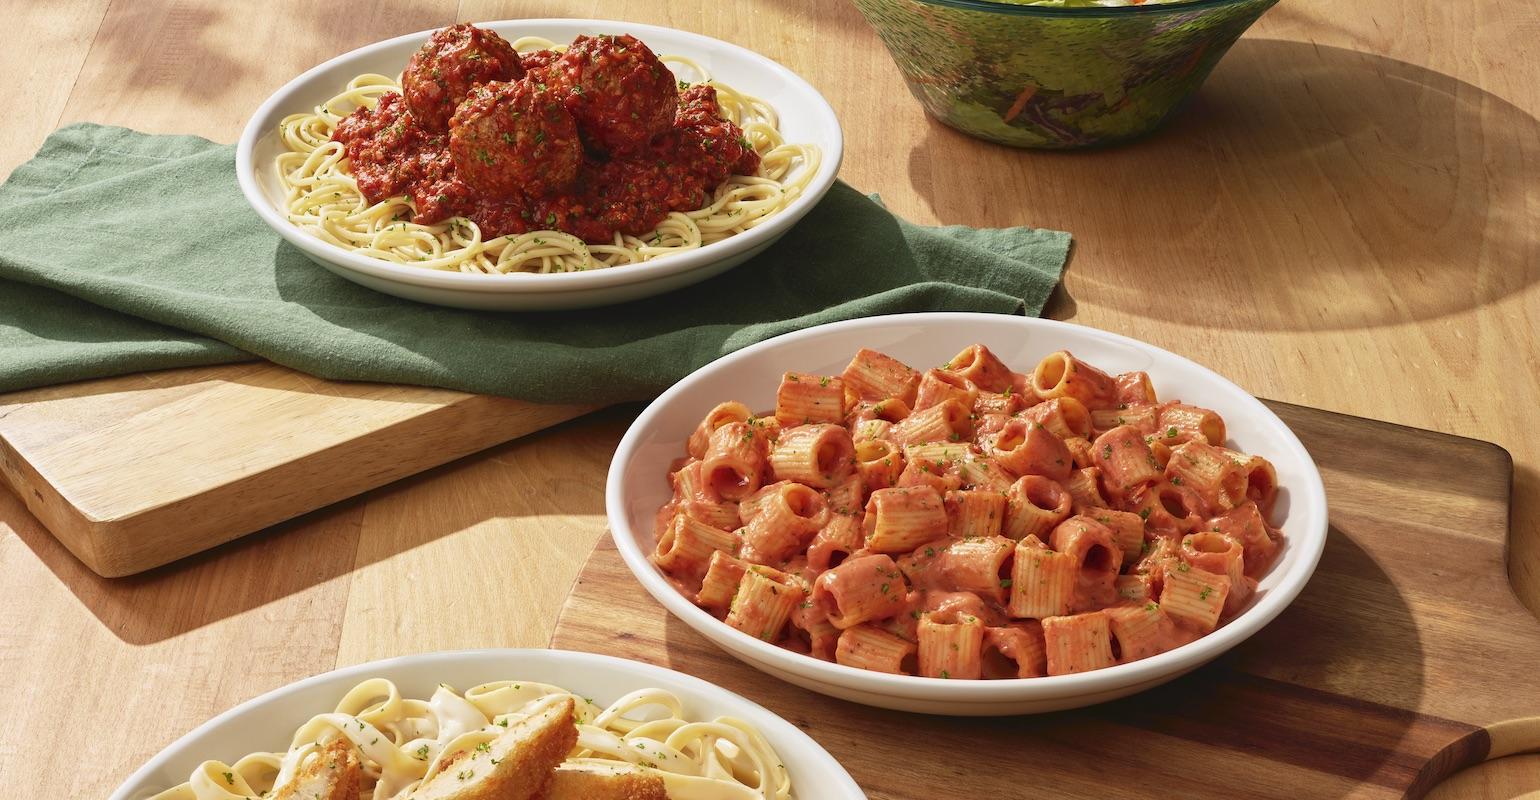 Olive Garden brings back Never Ending Pasta after 2-year break | Nation's  Restaurant News